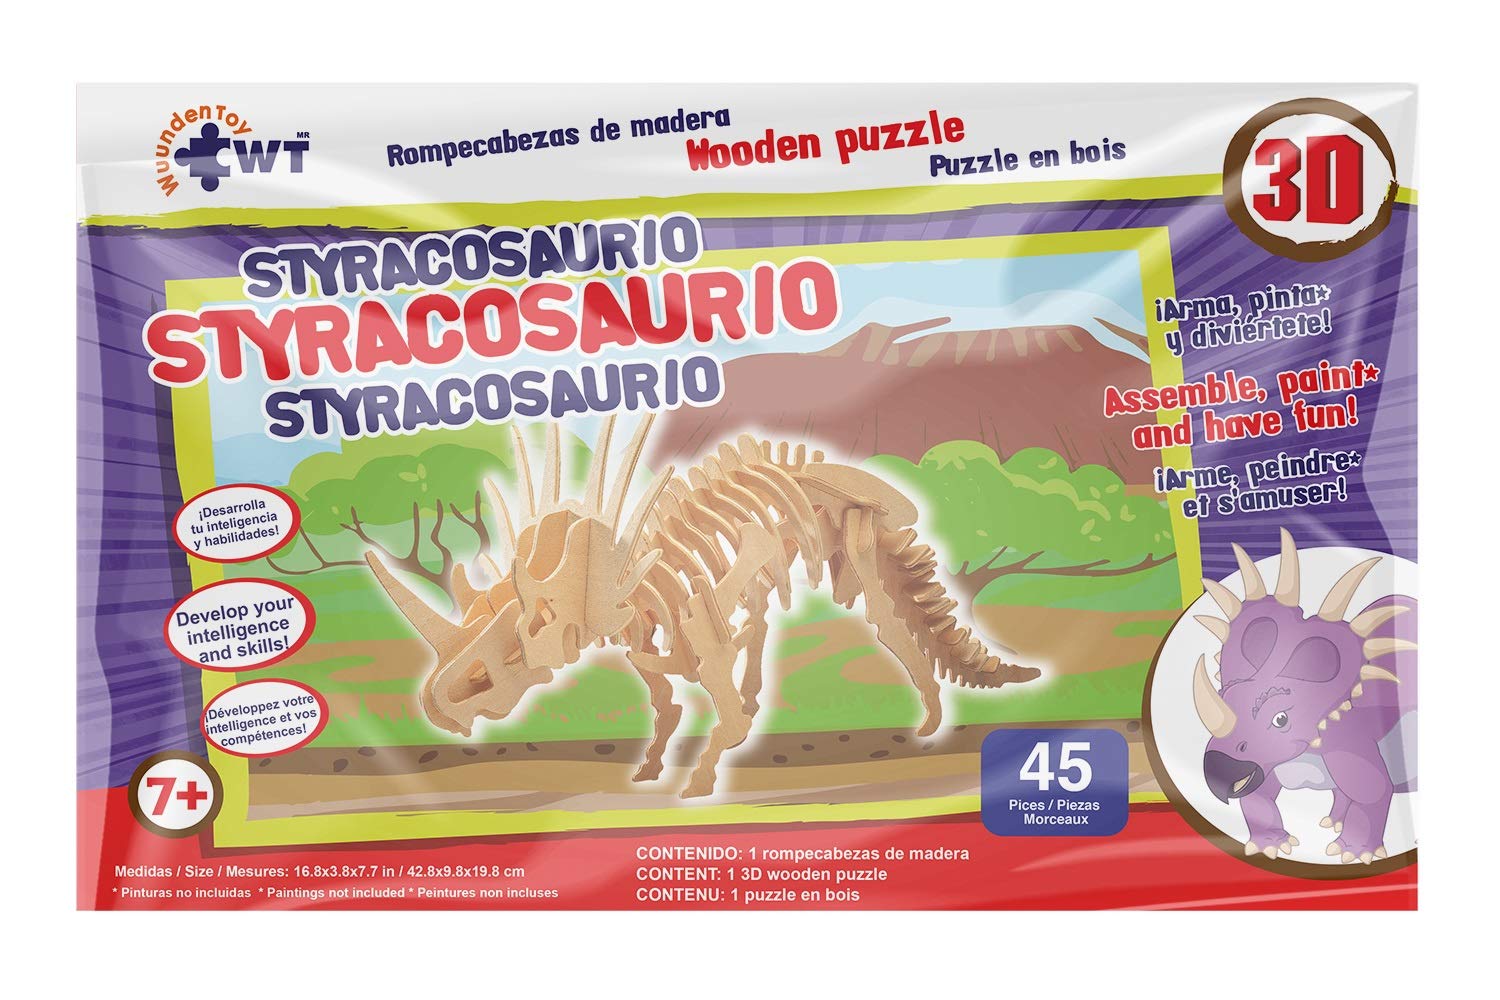 Styracosaurus Stem Brain Teasers 3D Wooden Animal Puzzles